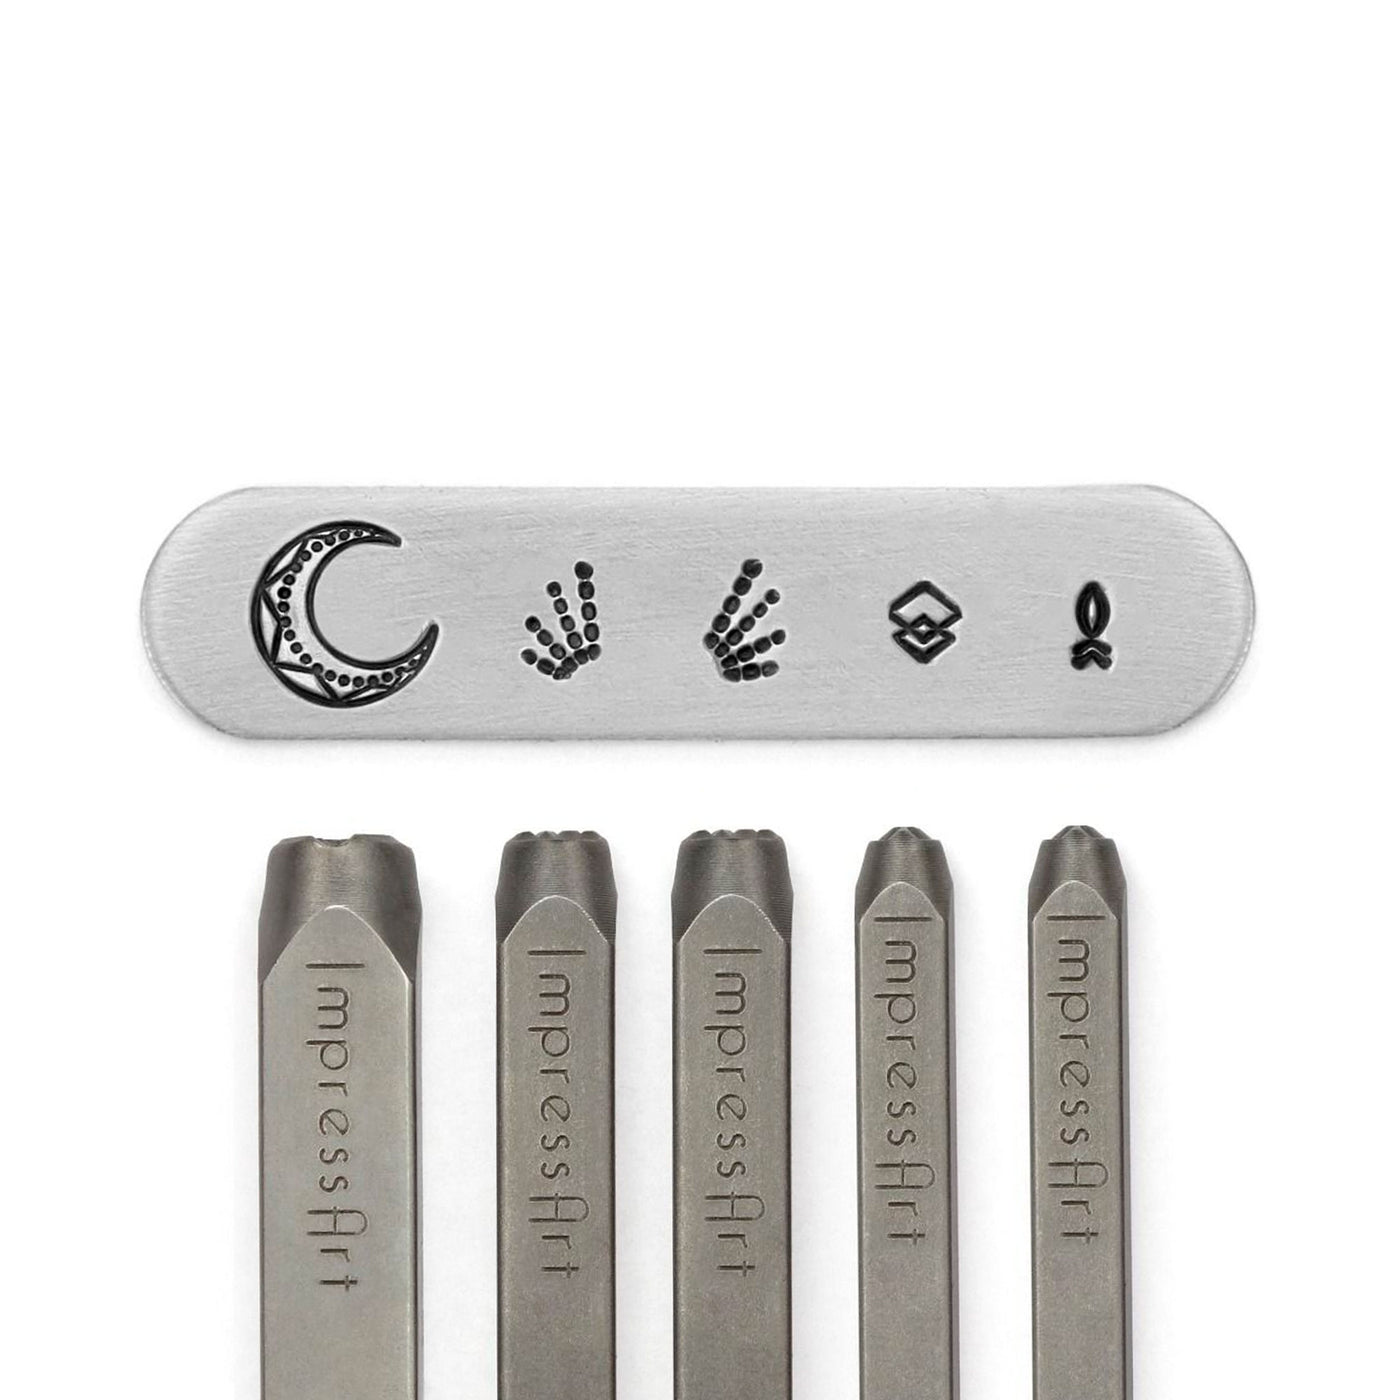  ImpressArt - Metal Stamping Kit, Includes All